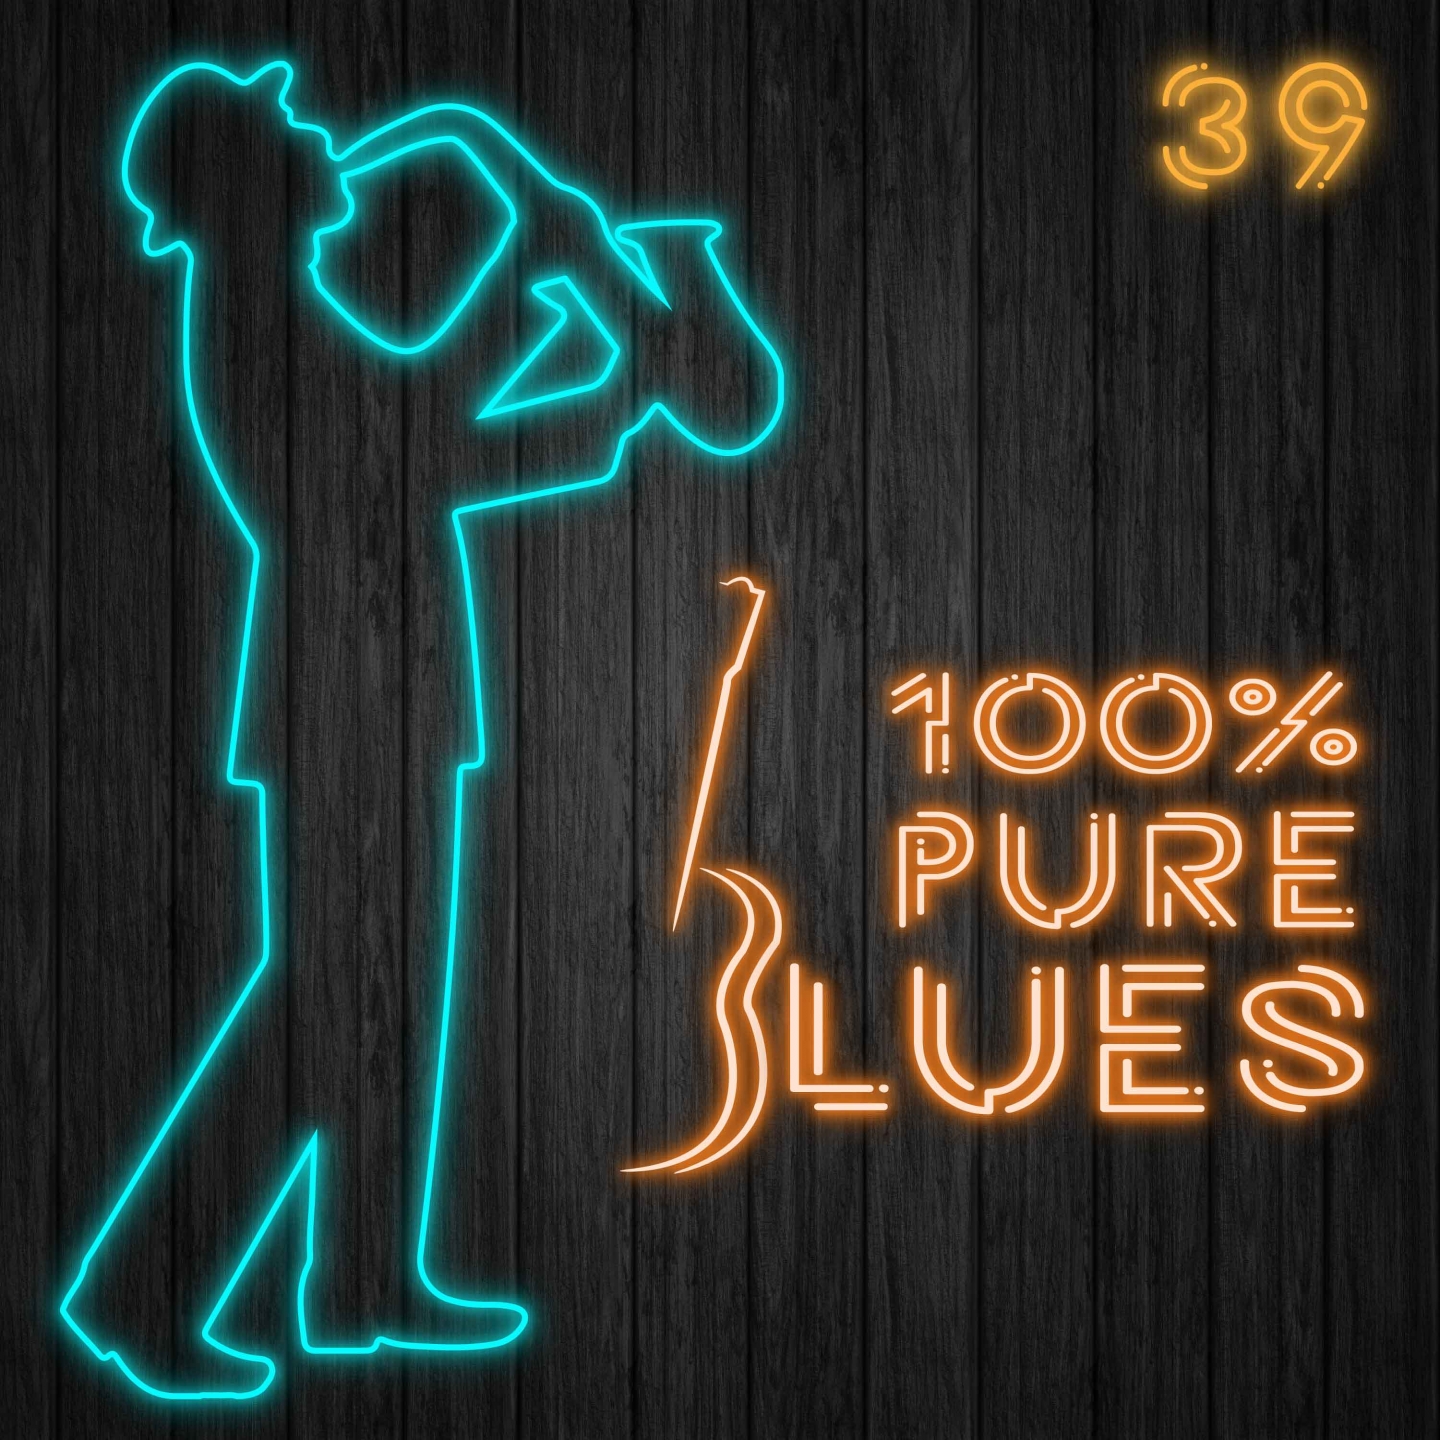 100% Pure Blues / 39